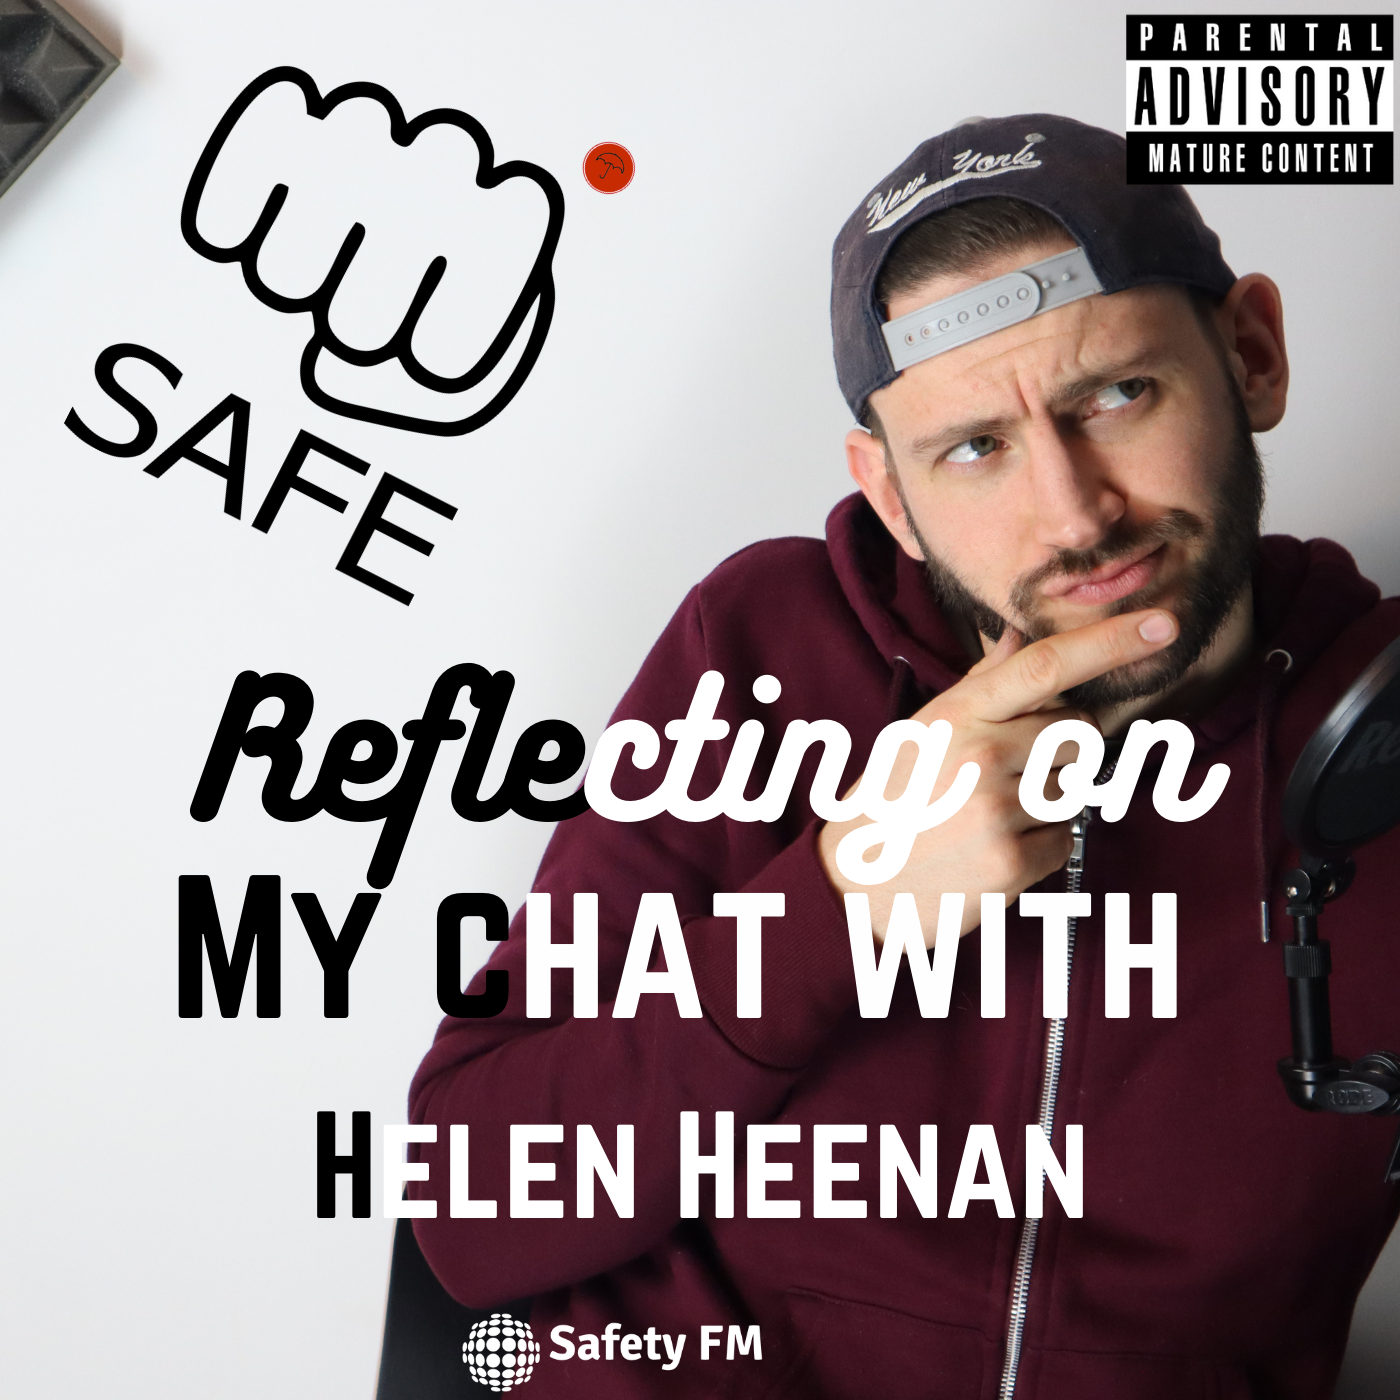 Reflecting on Helen Heena Part 1